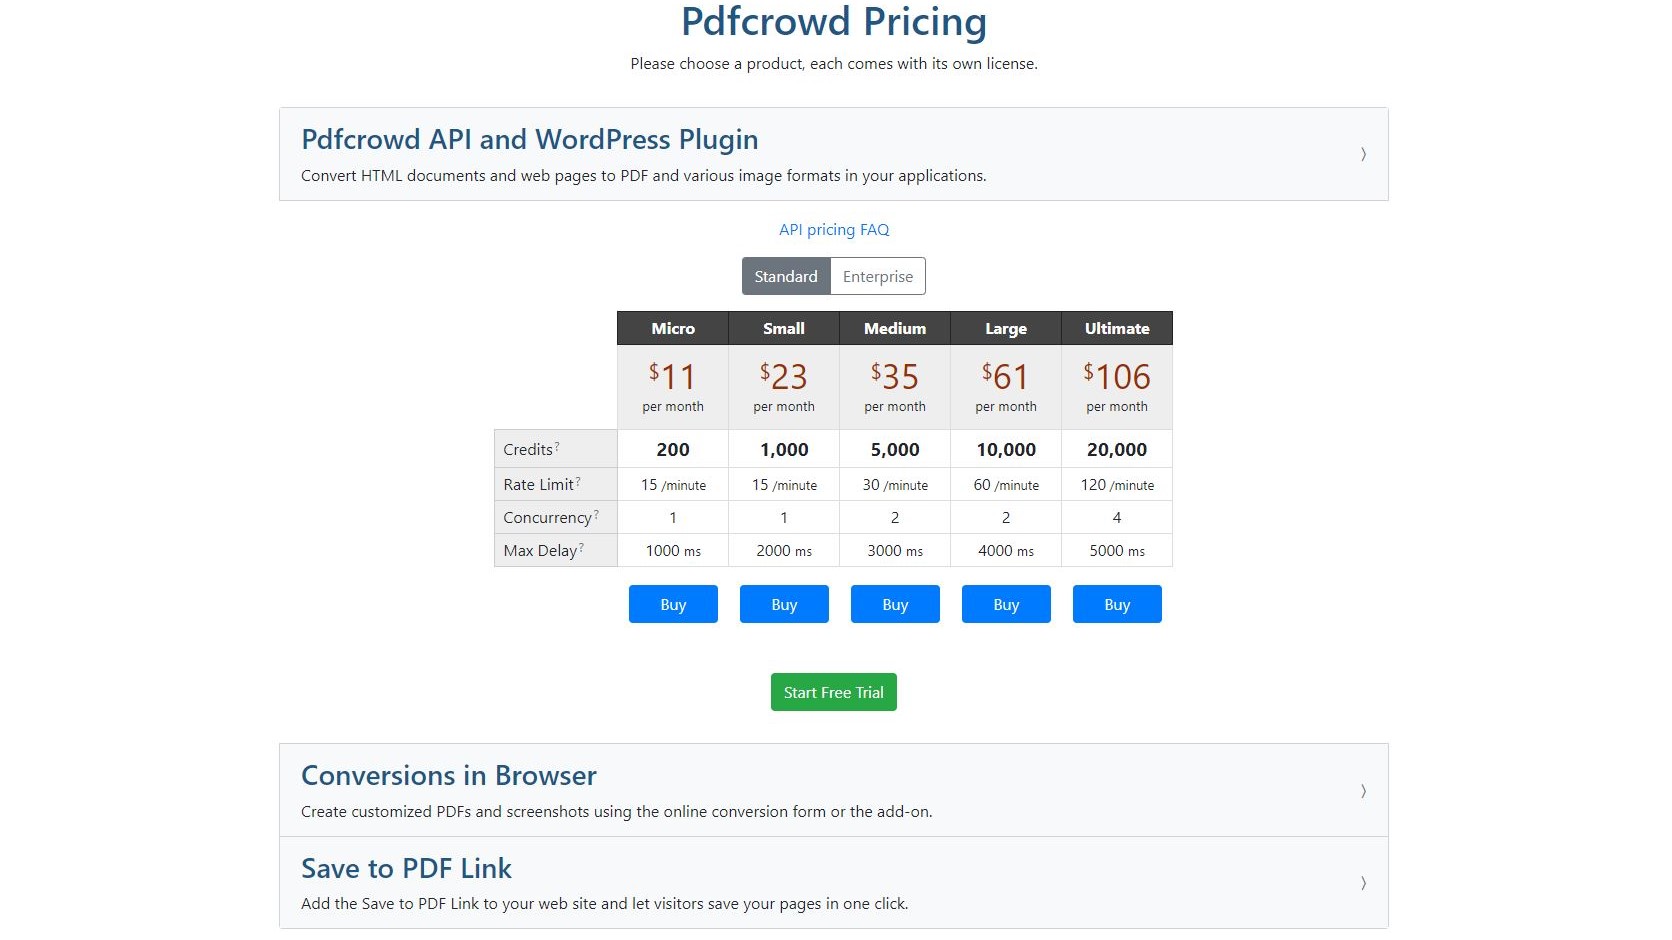 API and WordPress Pricing